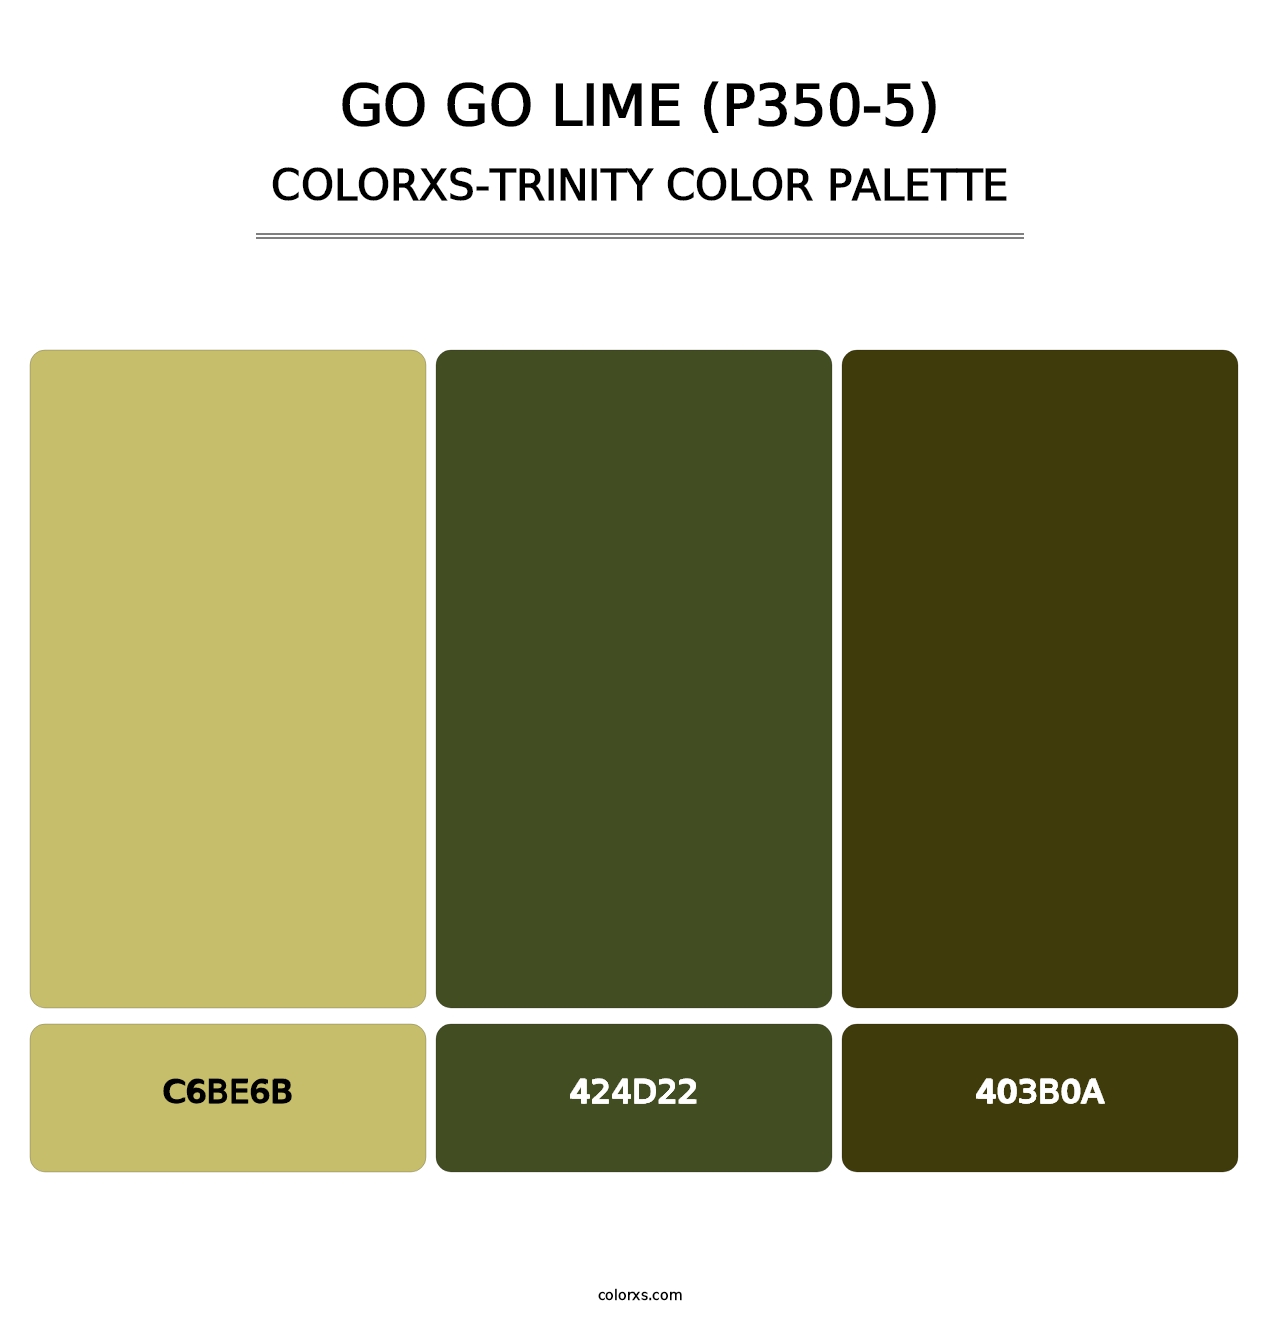 Go Go Lime (P350-5) - Colorxs Trinity Palette